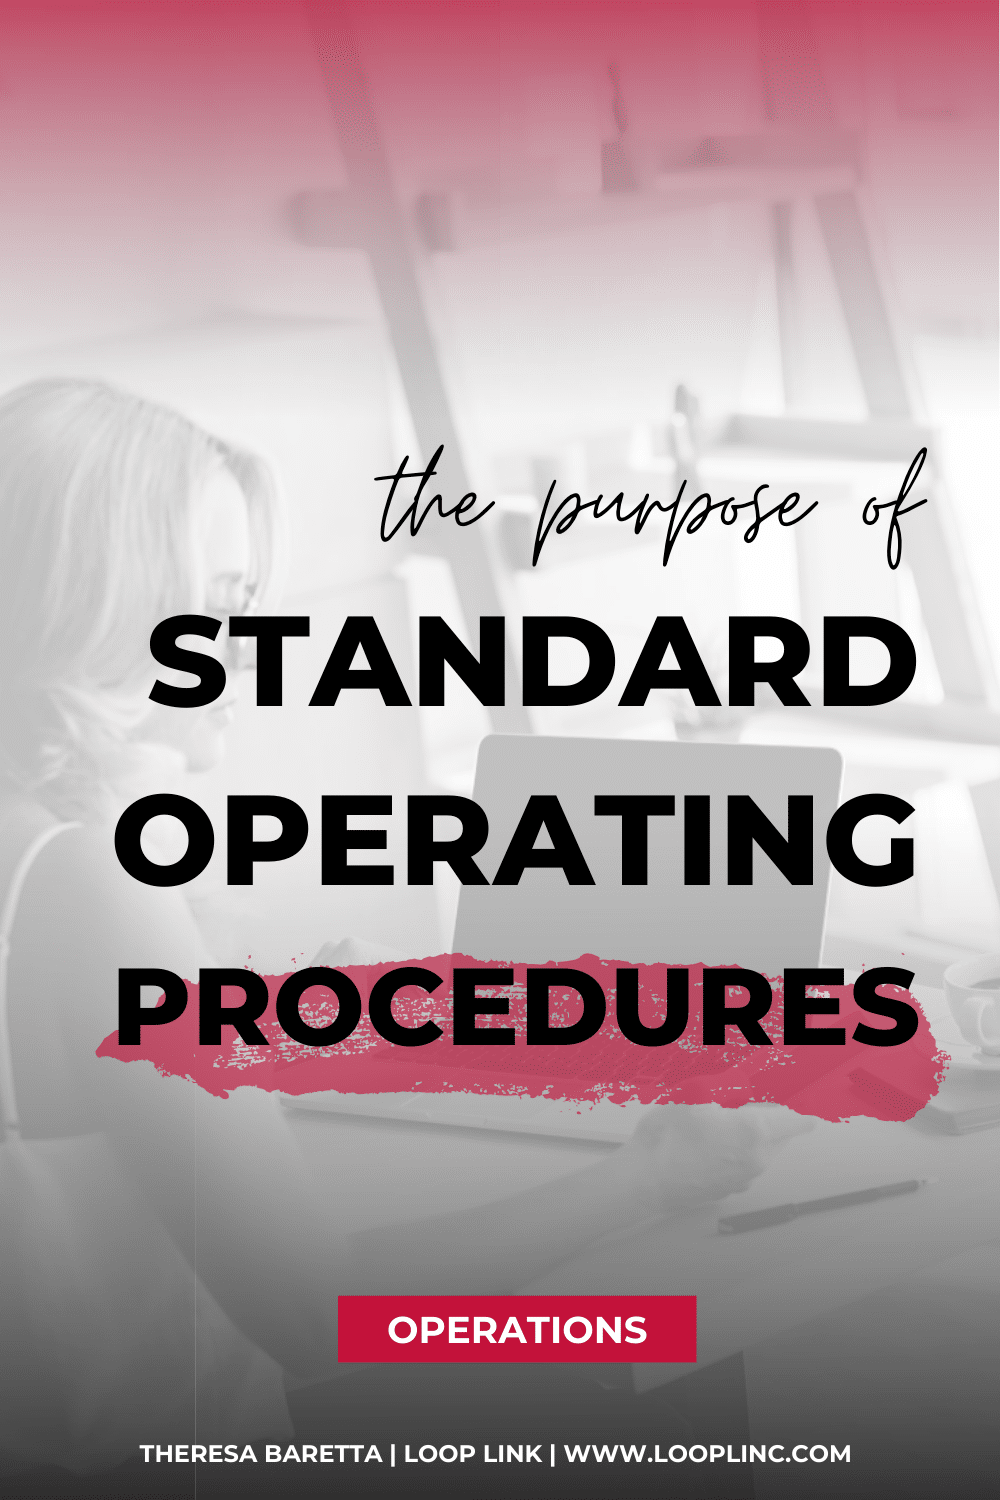 Purpose of Standard Operating Procedures